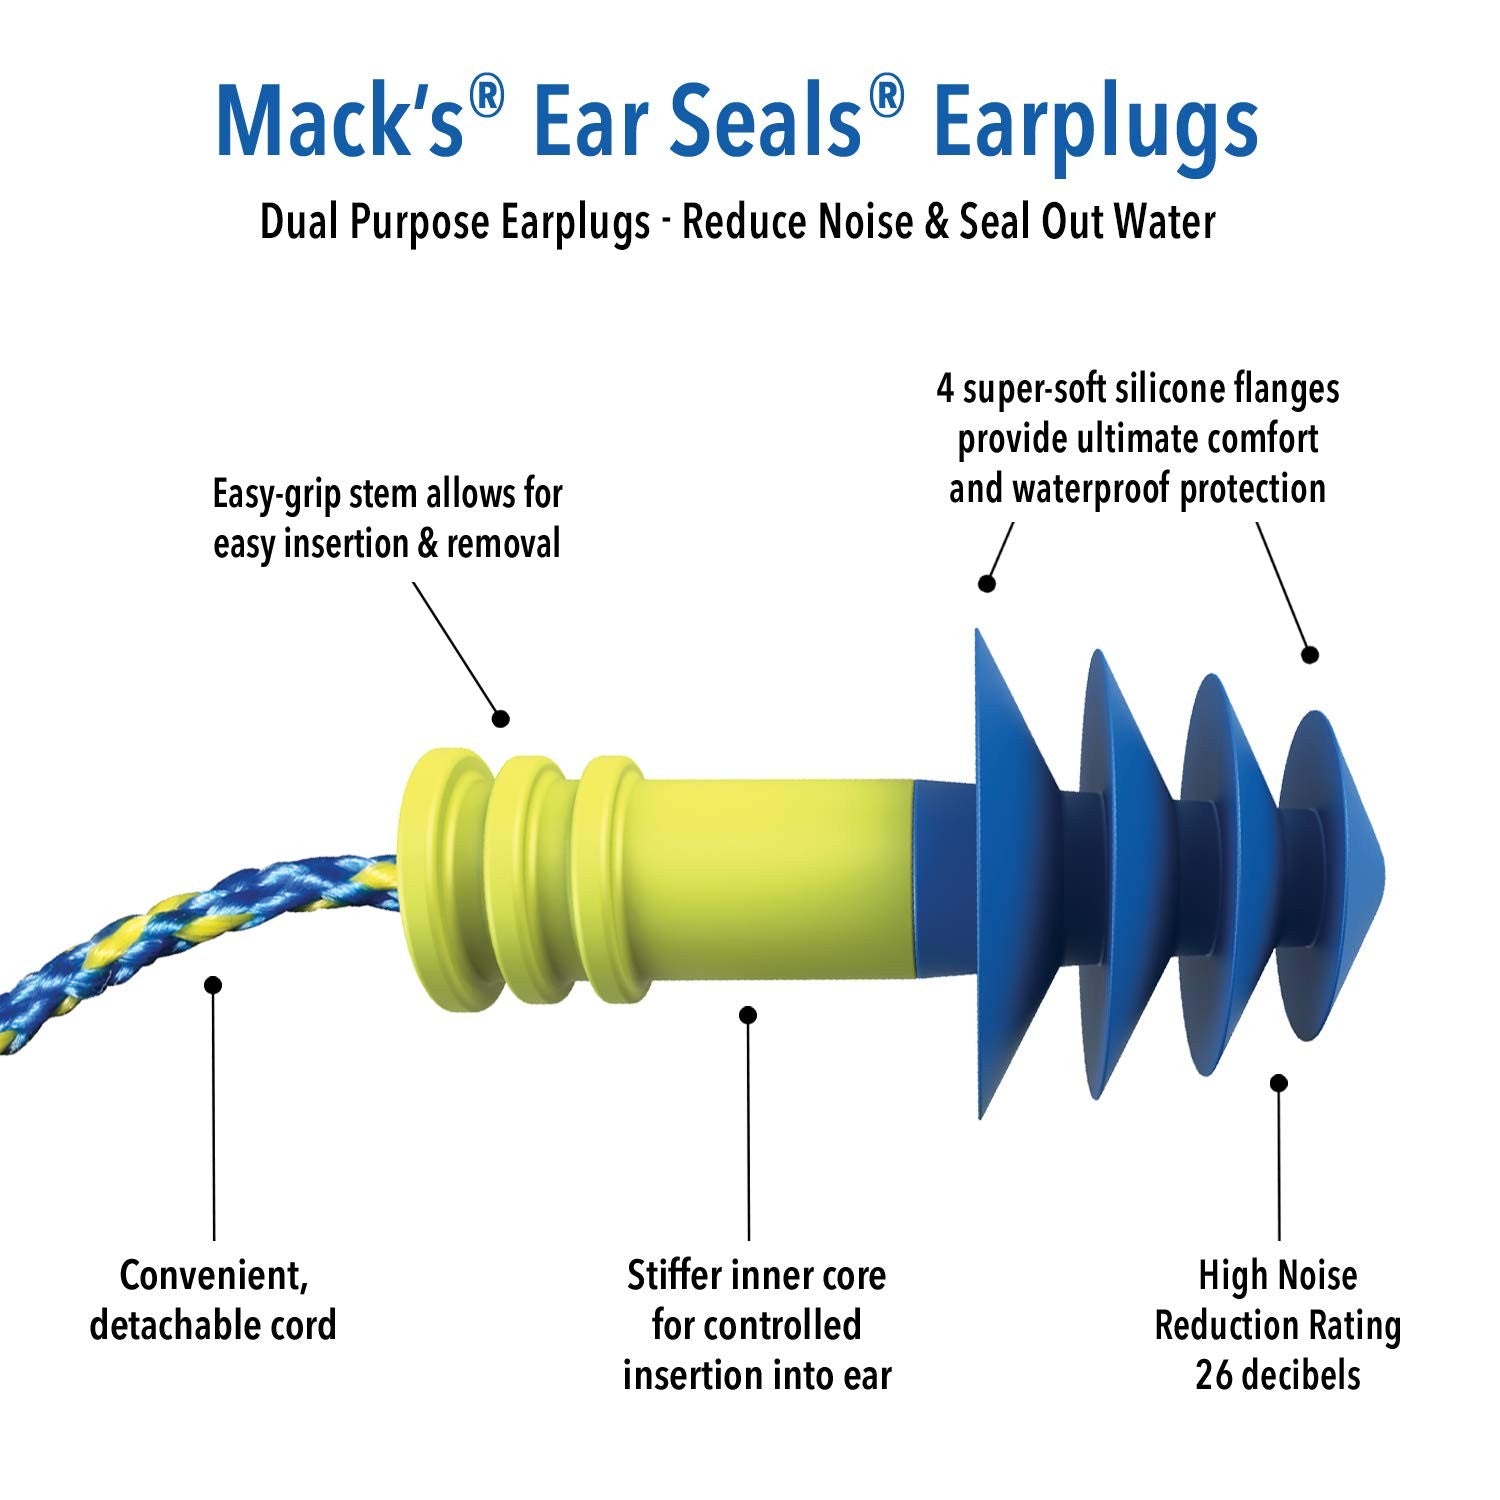 MACK'S EARPLUGS - Ear Seals - 1 Pair